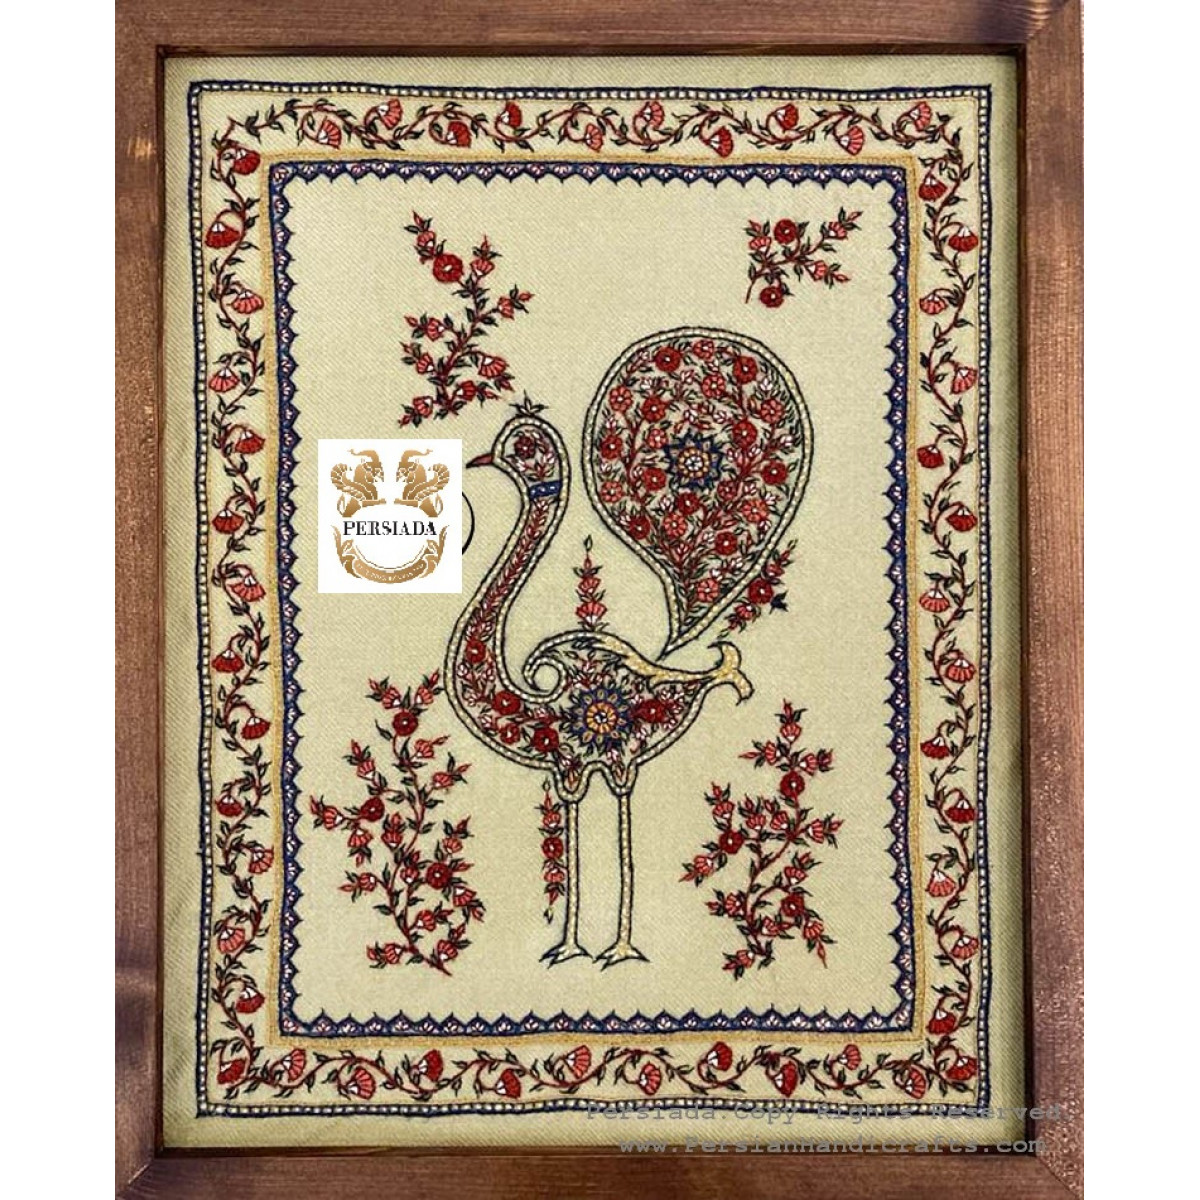 Wall Decor | Pateh Needlework | PHP1006-Persiada Persian Handicrafts